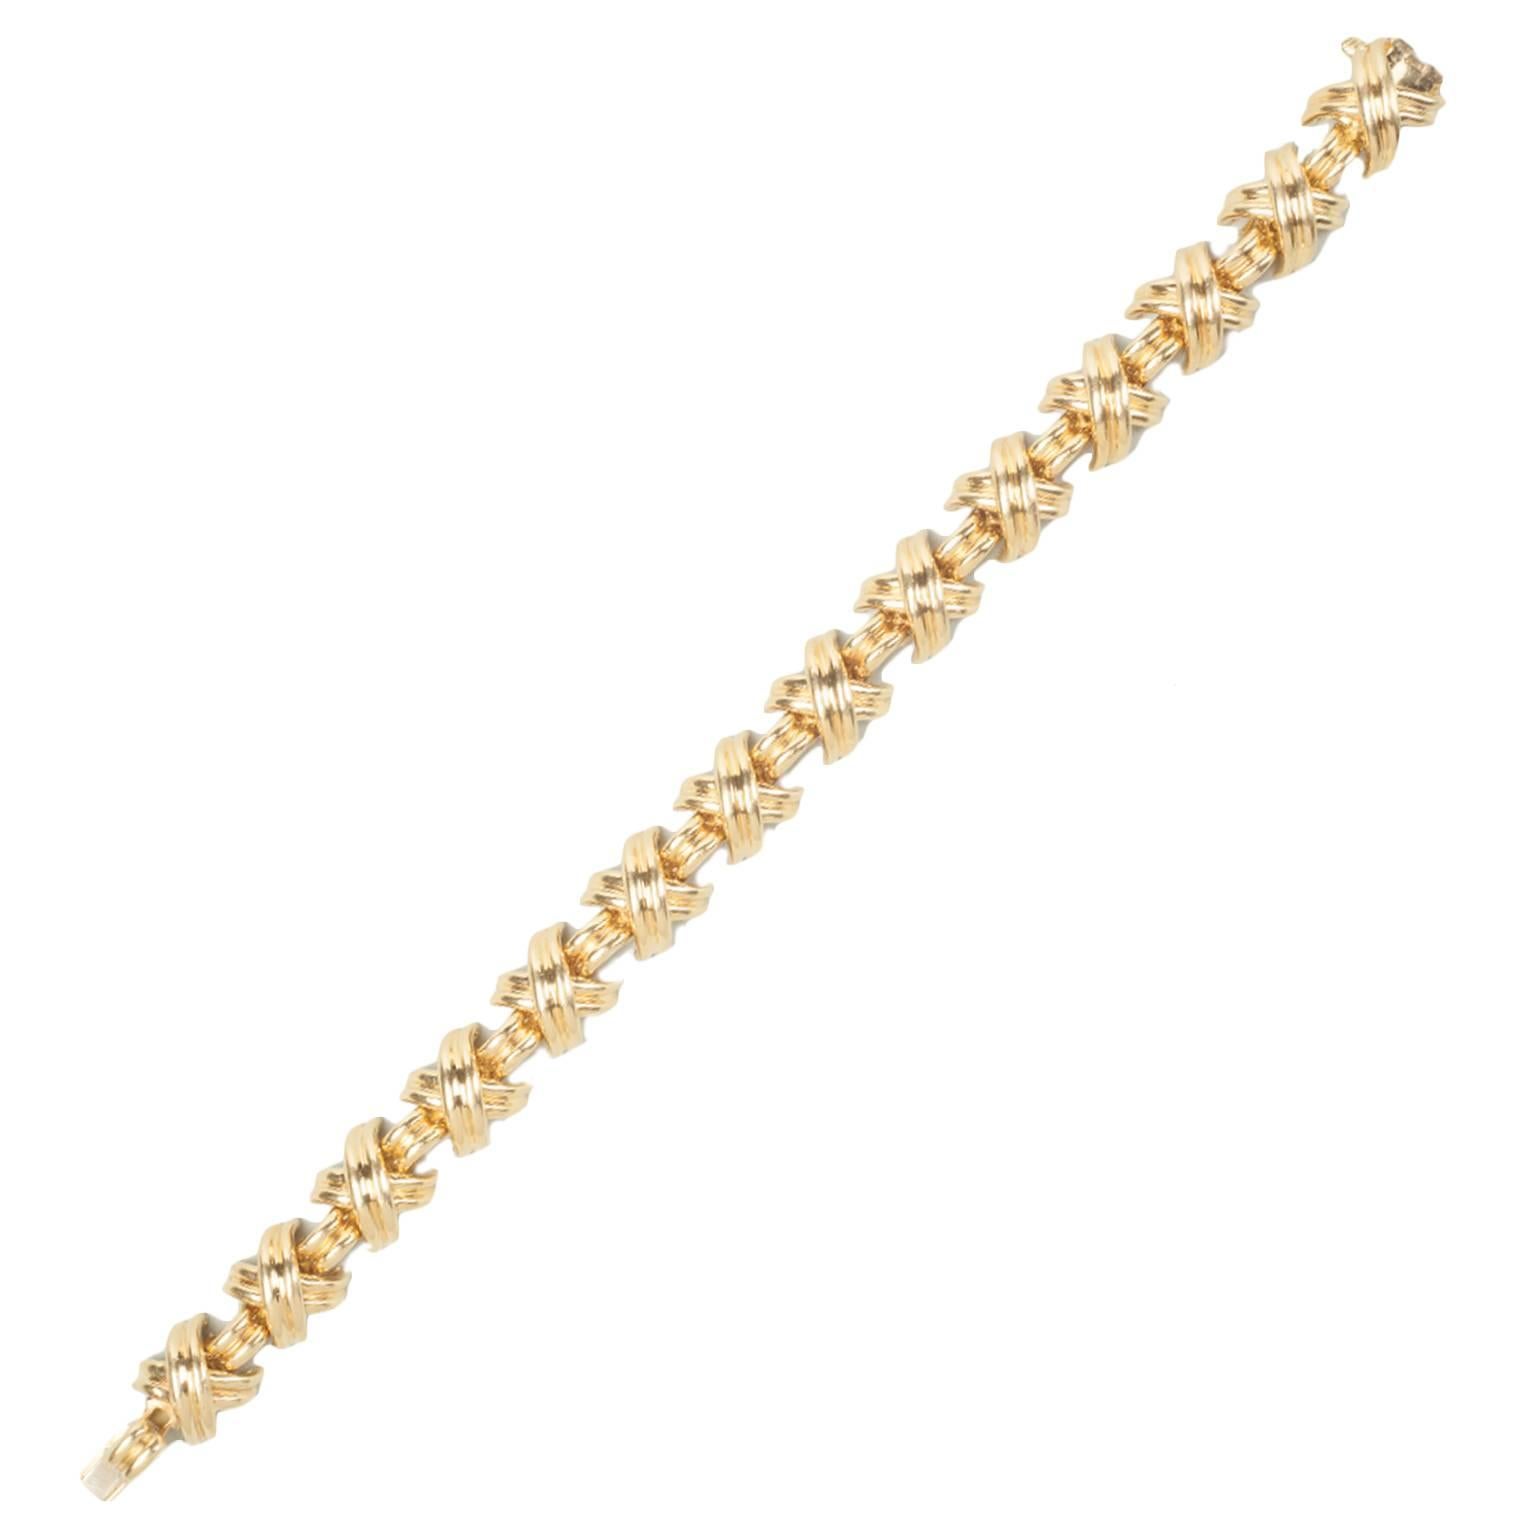 Tiffany & Co. "Kisses" Gold Bracelet